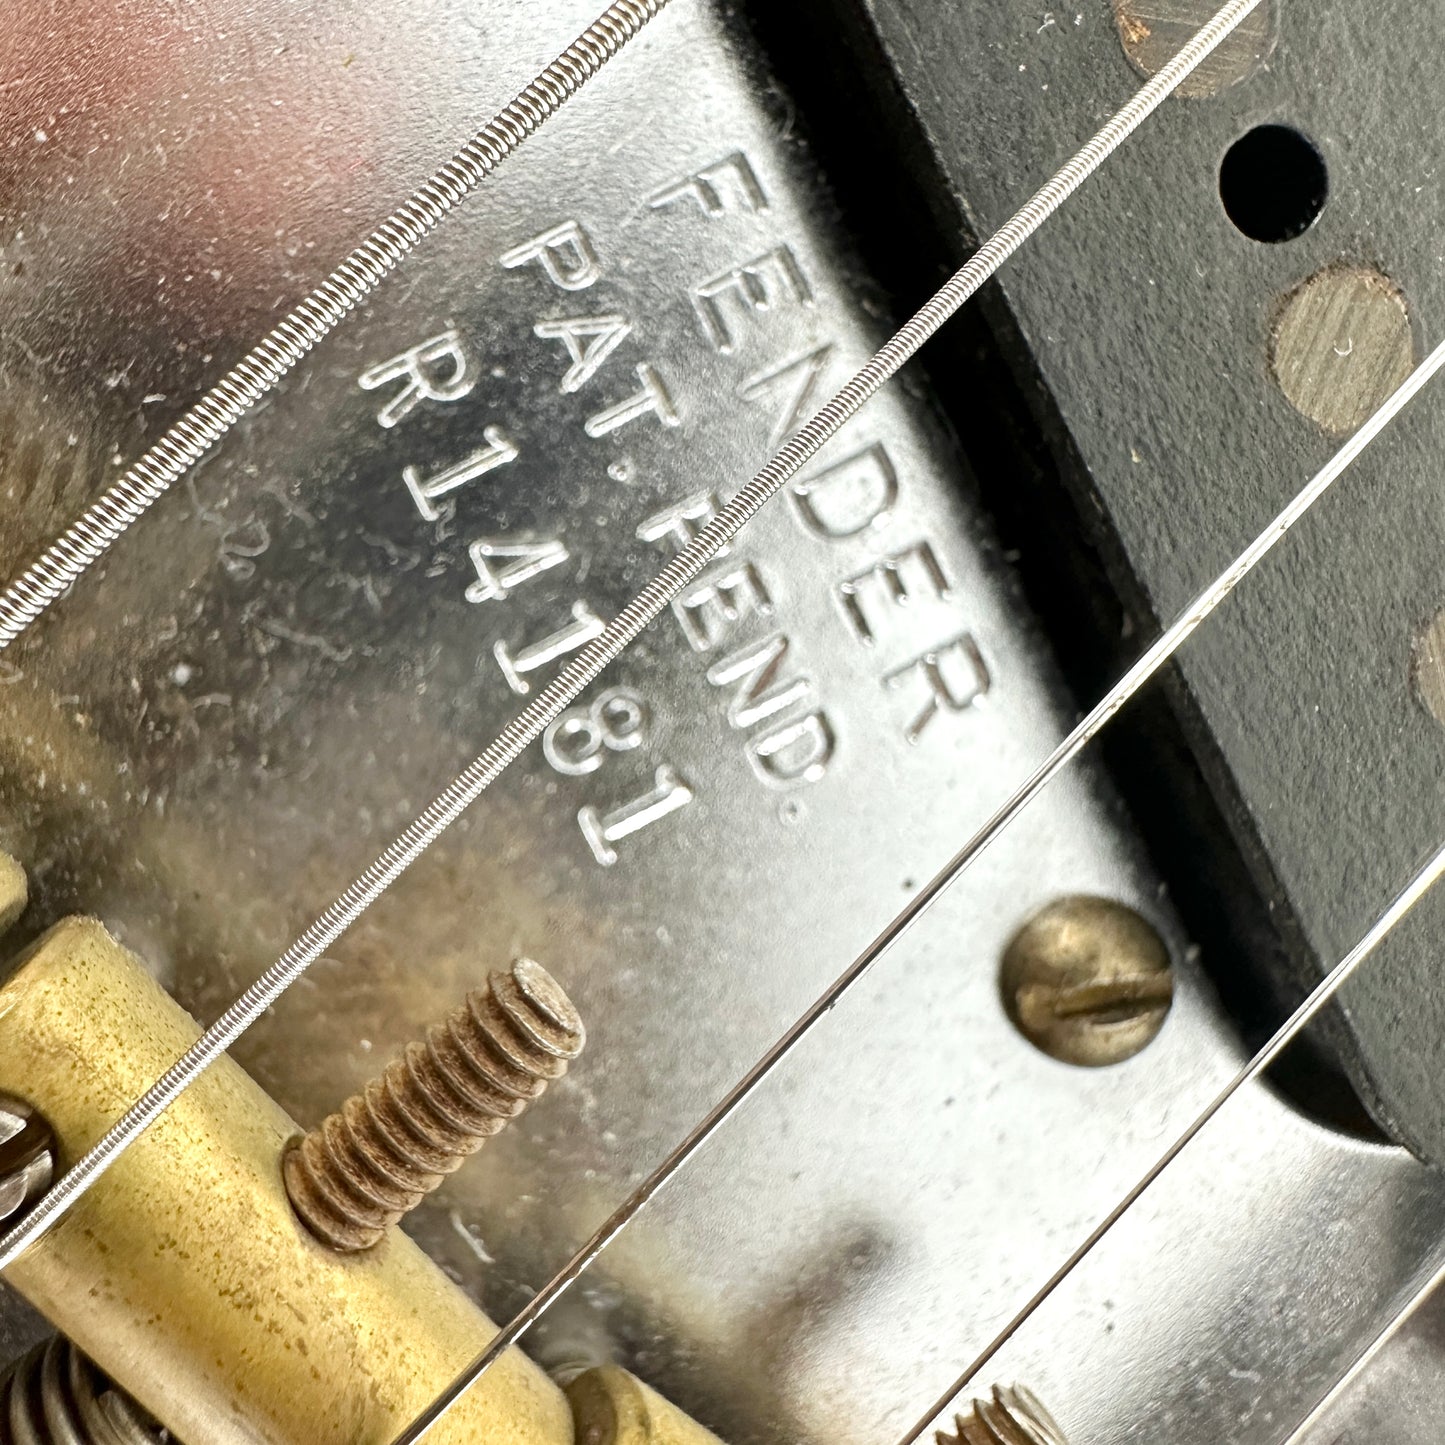 2014 Fender Custom Shop ’51 Nocaster Relic – 2 Colour Sunburst